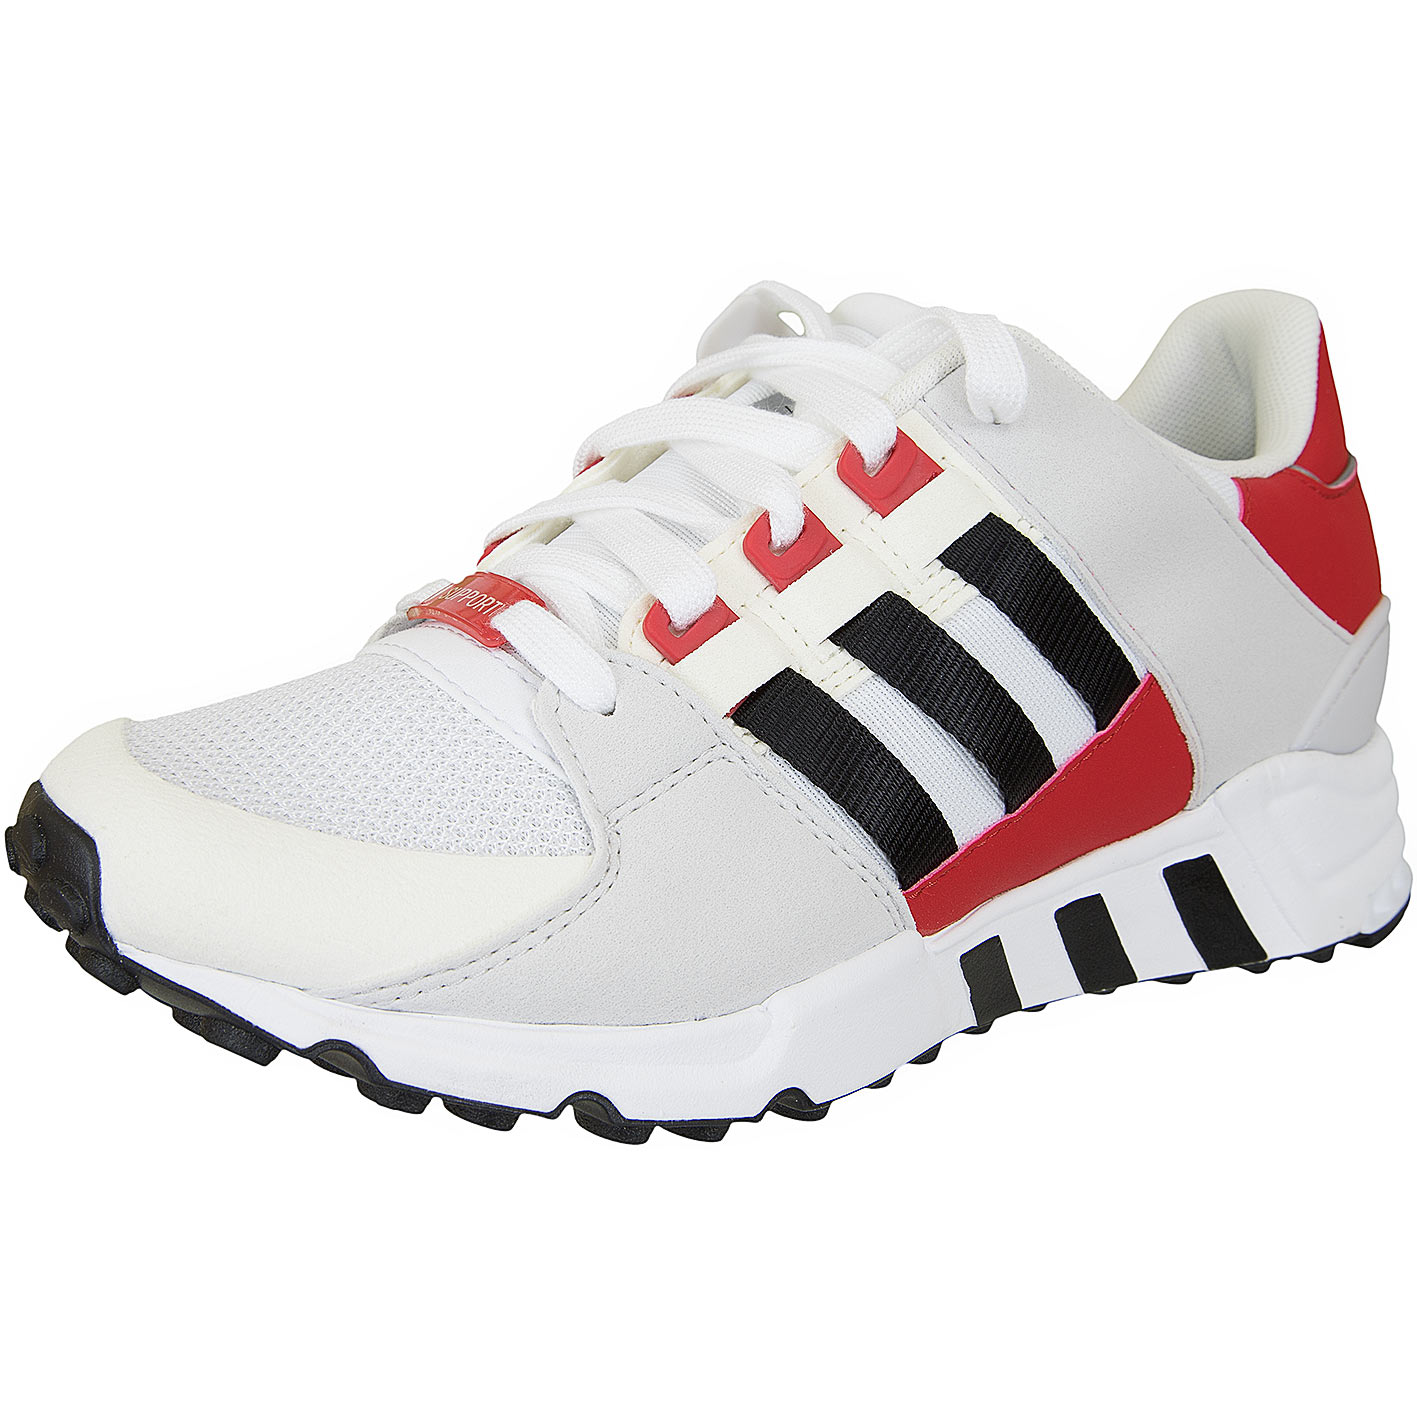 ☆ Adidas Originals Sneaker Equipment RF weiß/rot - hier bestellen!